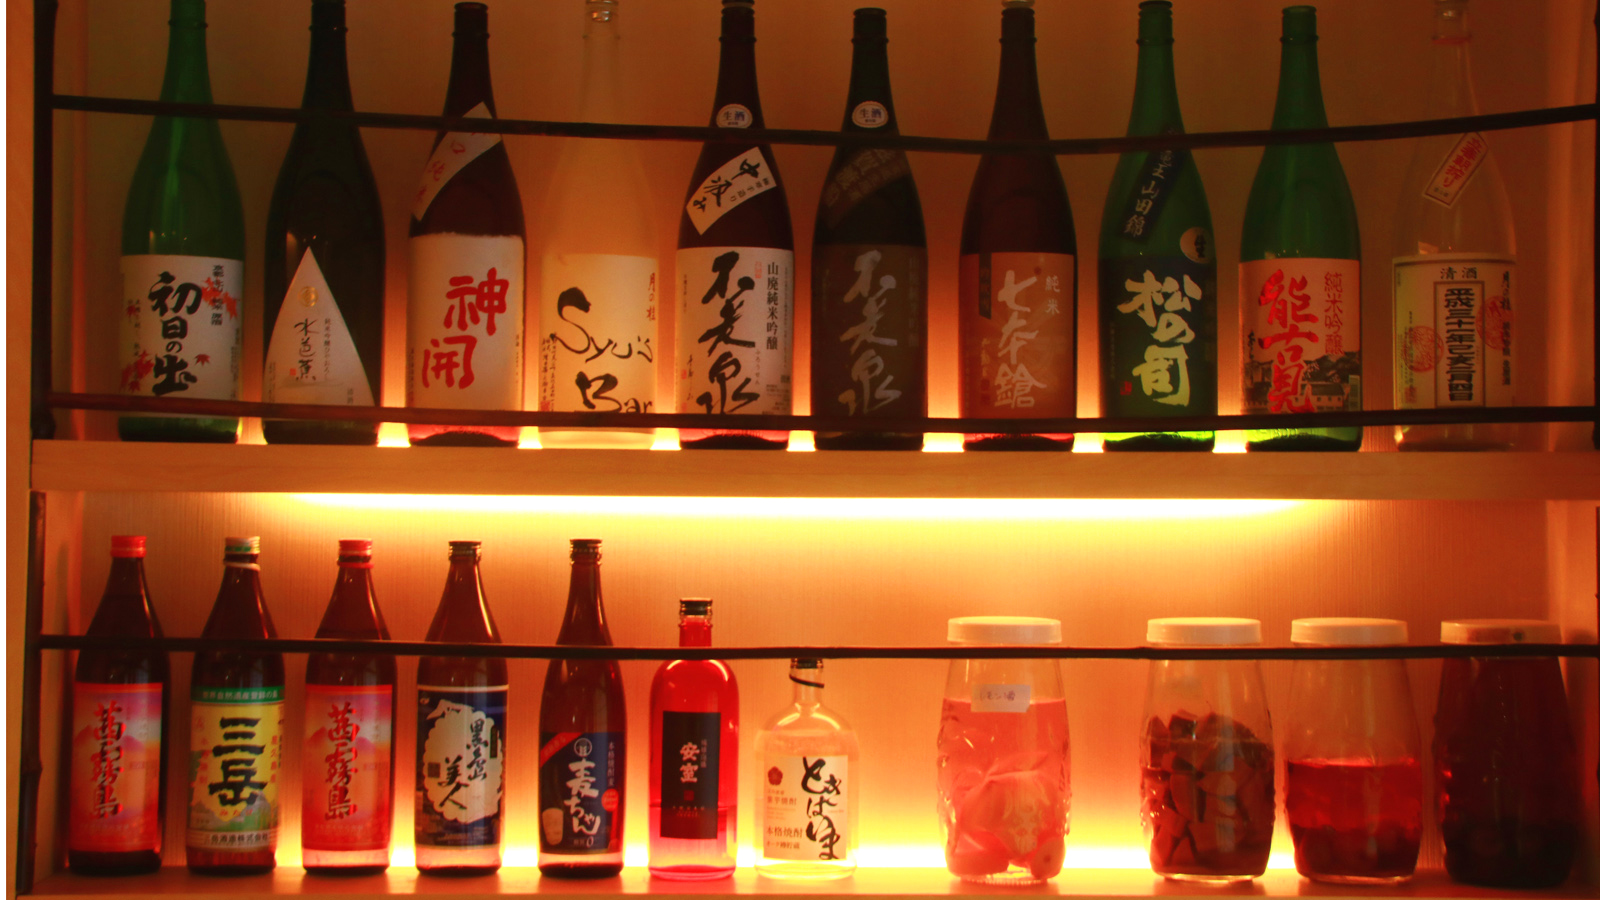 【bar】大好きな日本酒や焼酎、果実酒も取り揃えております。